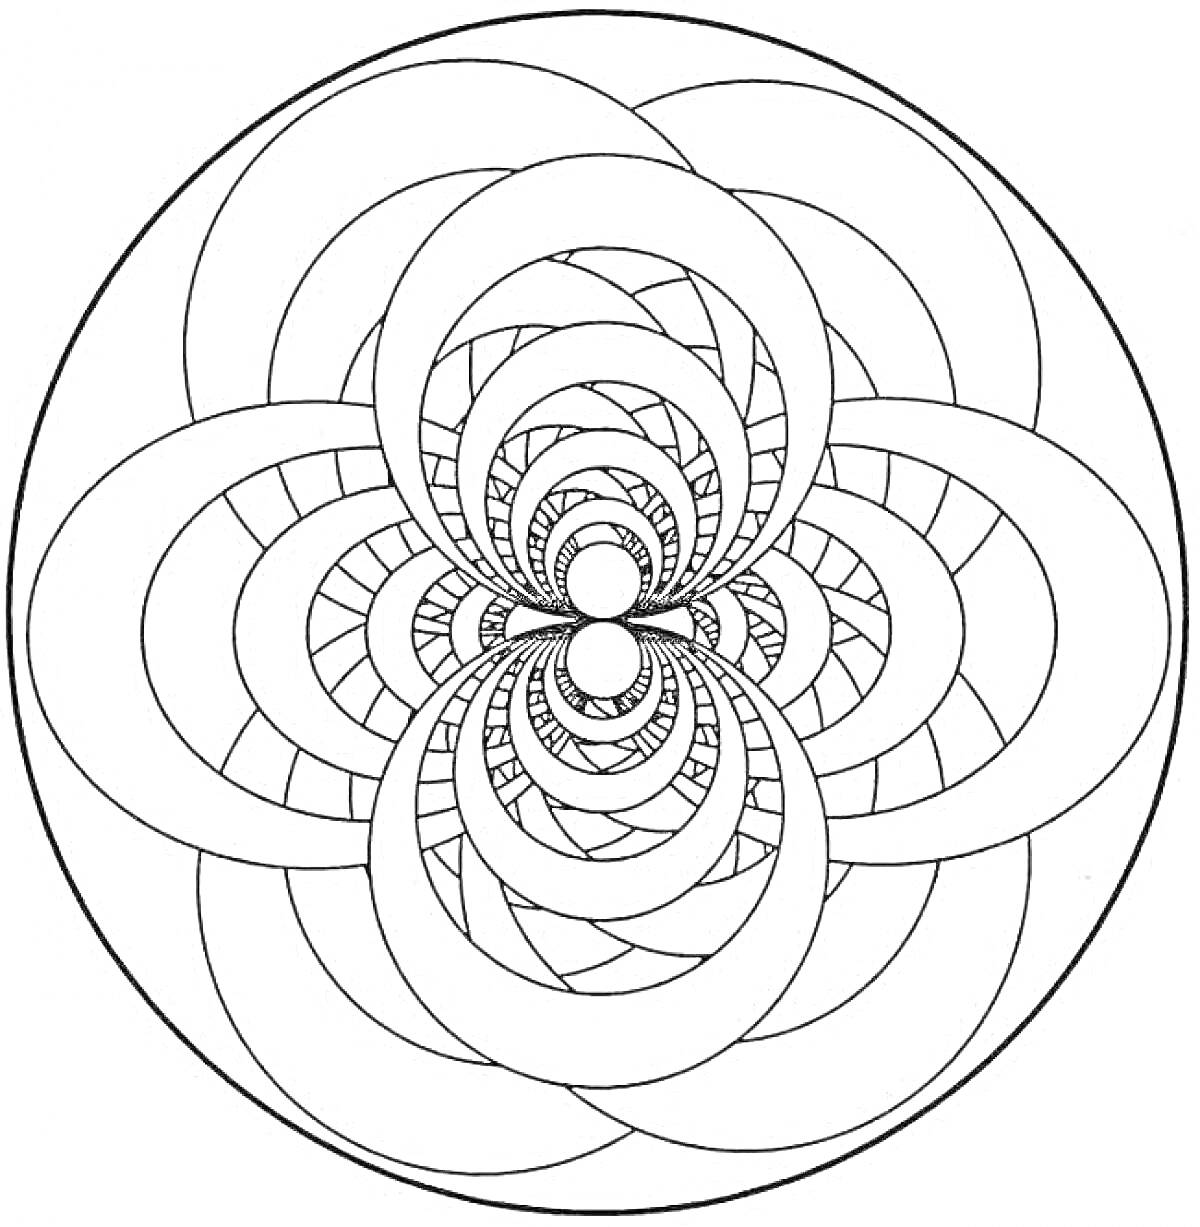 На раскраске изображено: Спираль, Круги, Концентрические круги, Антистресс, Узоры, Геометрические узоры